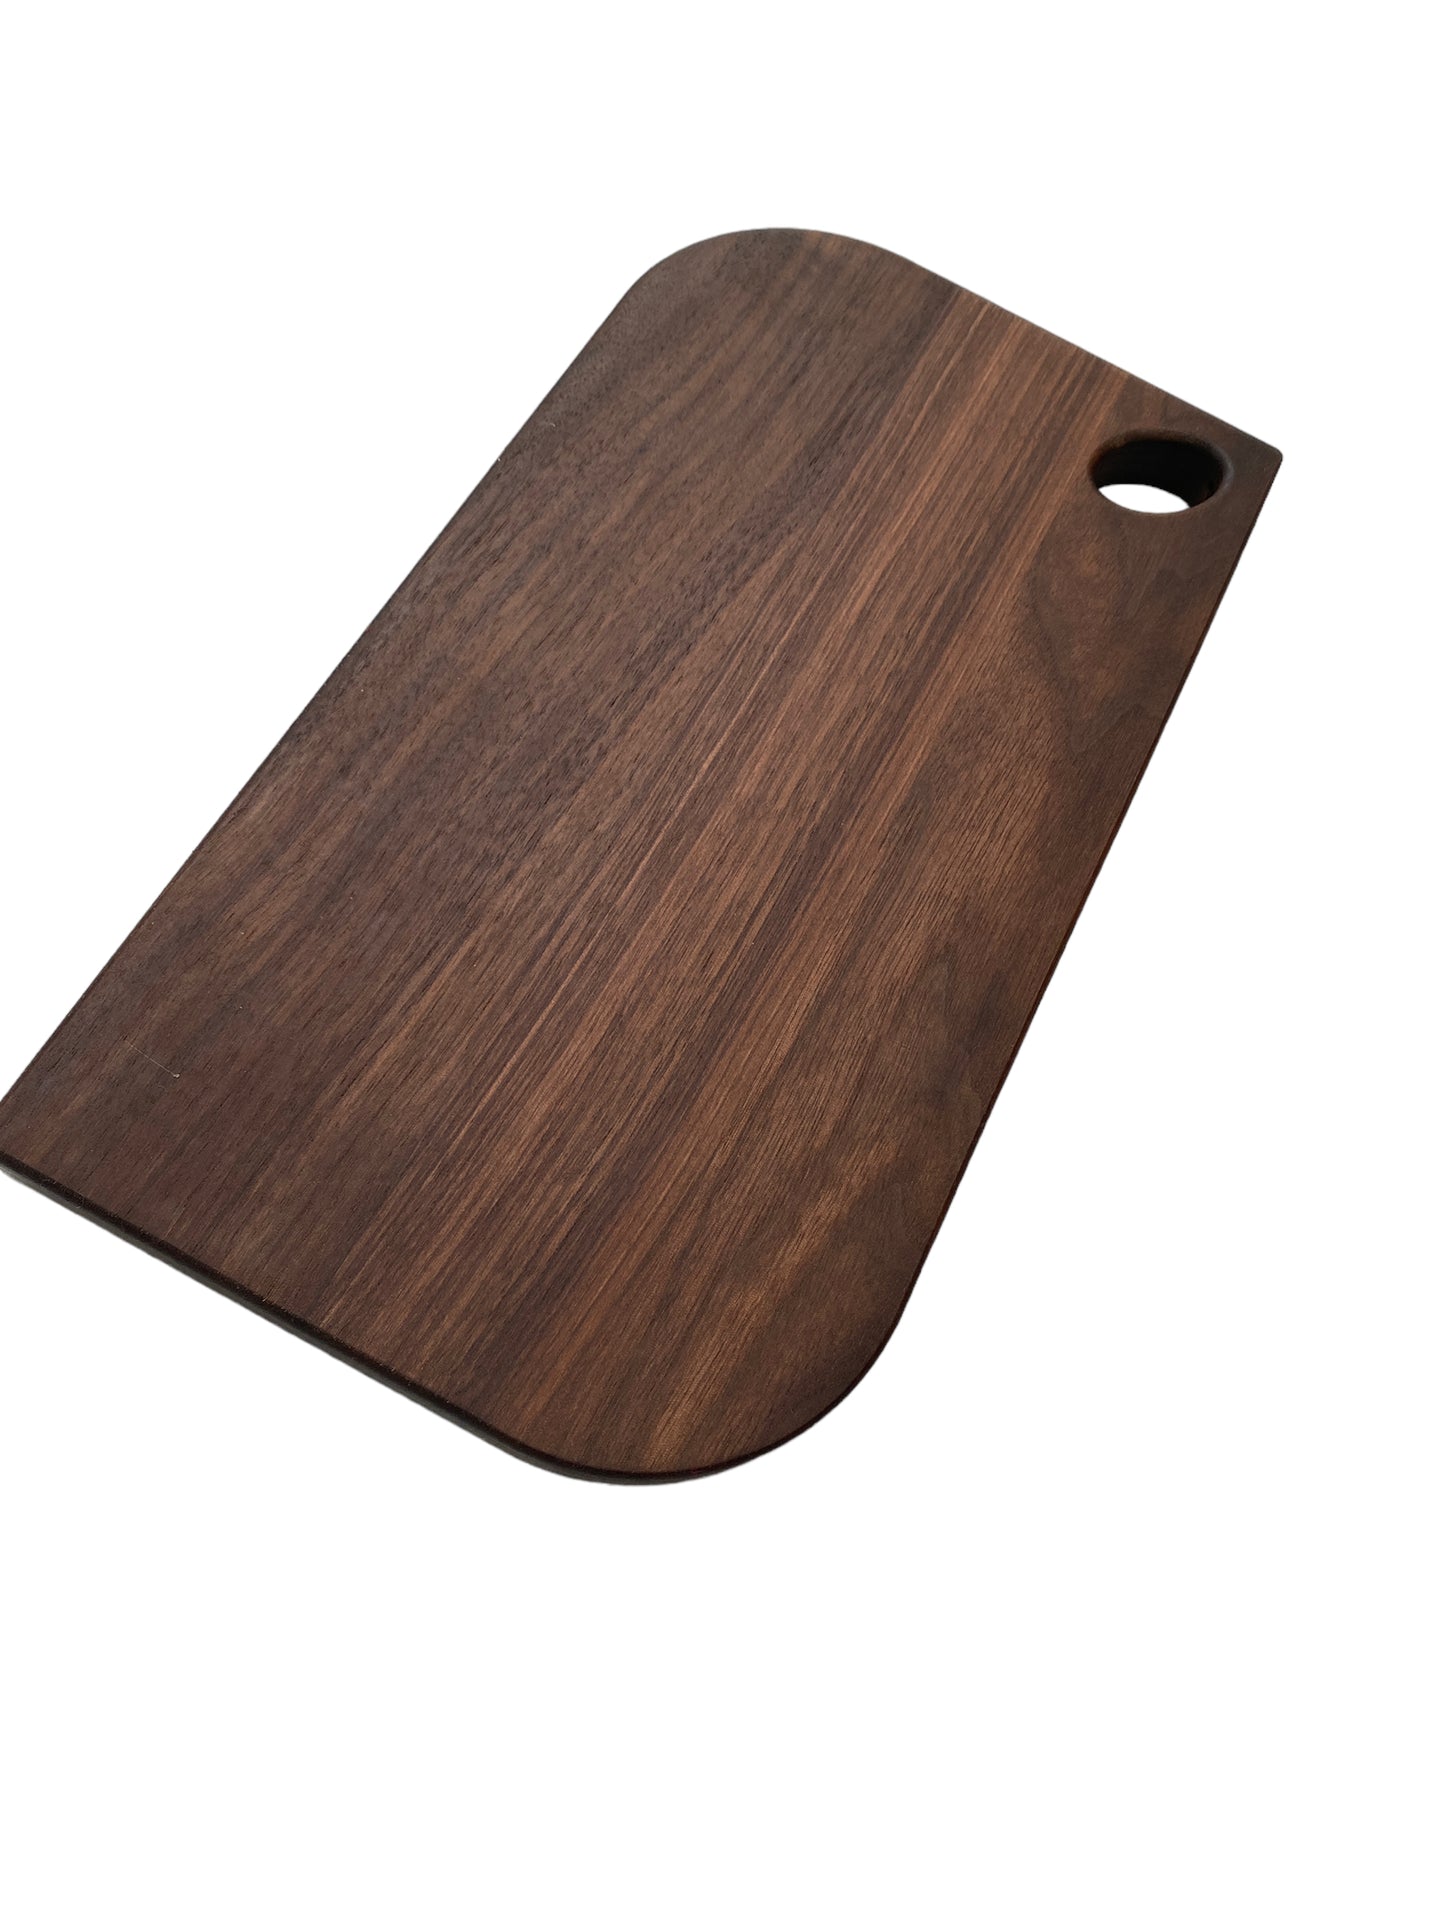 Small Wood Cutting Board